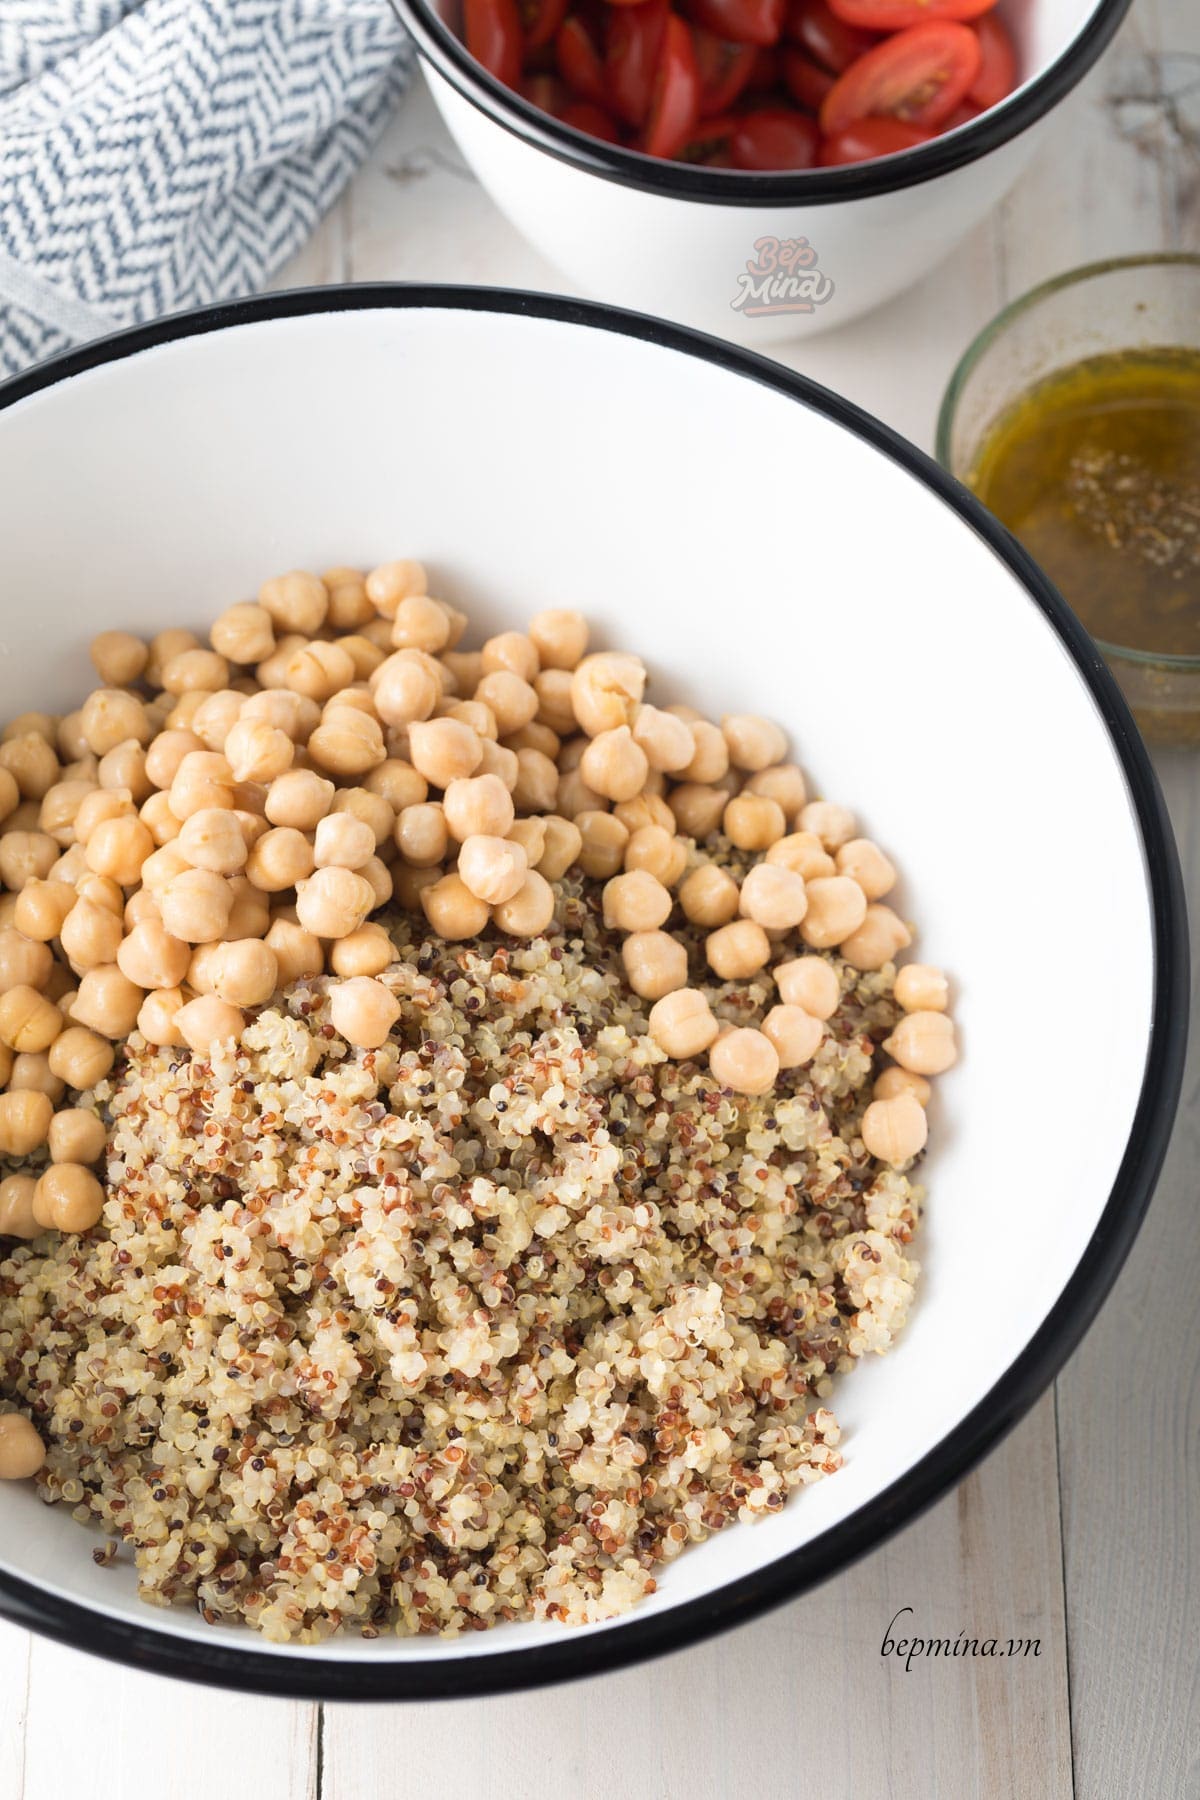 nấu chín hạt quinoa